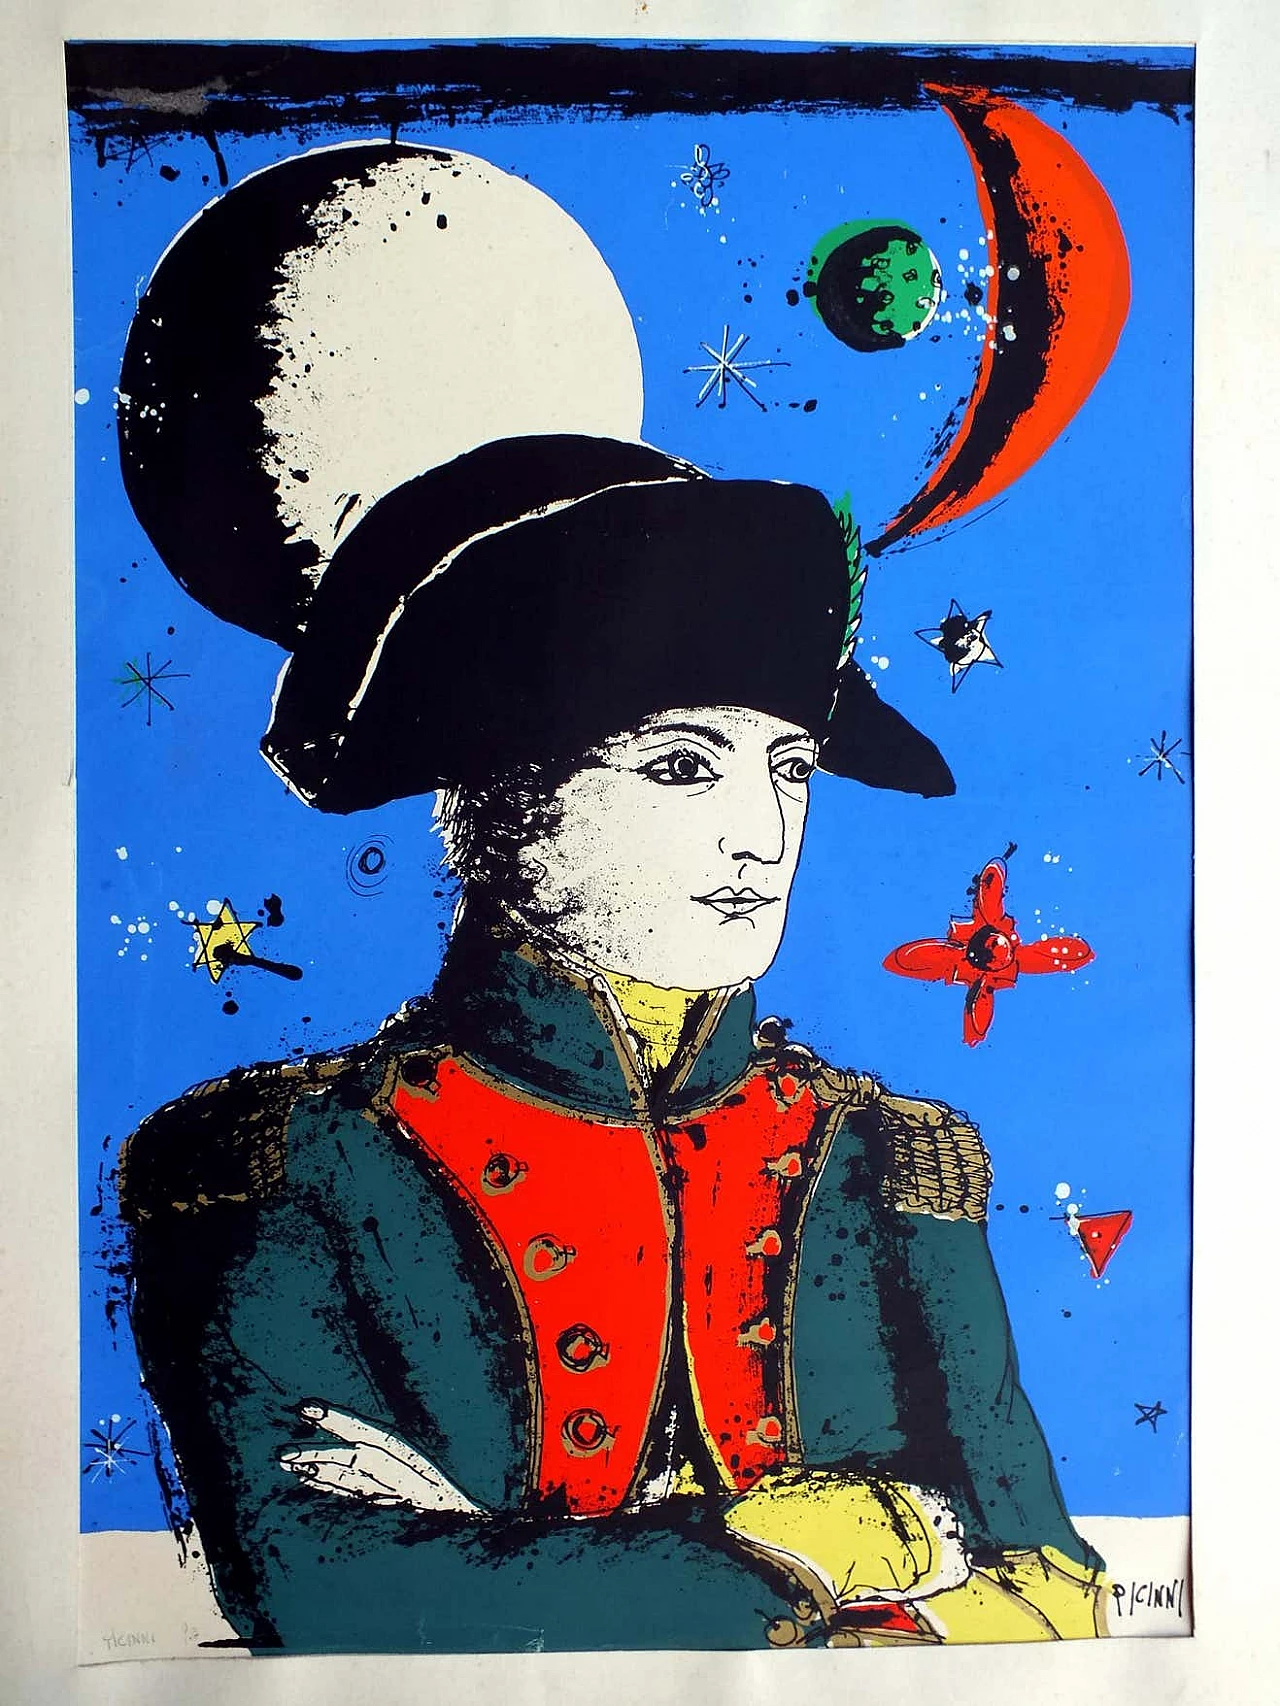 Gennaro Picinni, Napoleon, silkscreen print, 1970s 2